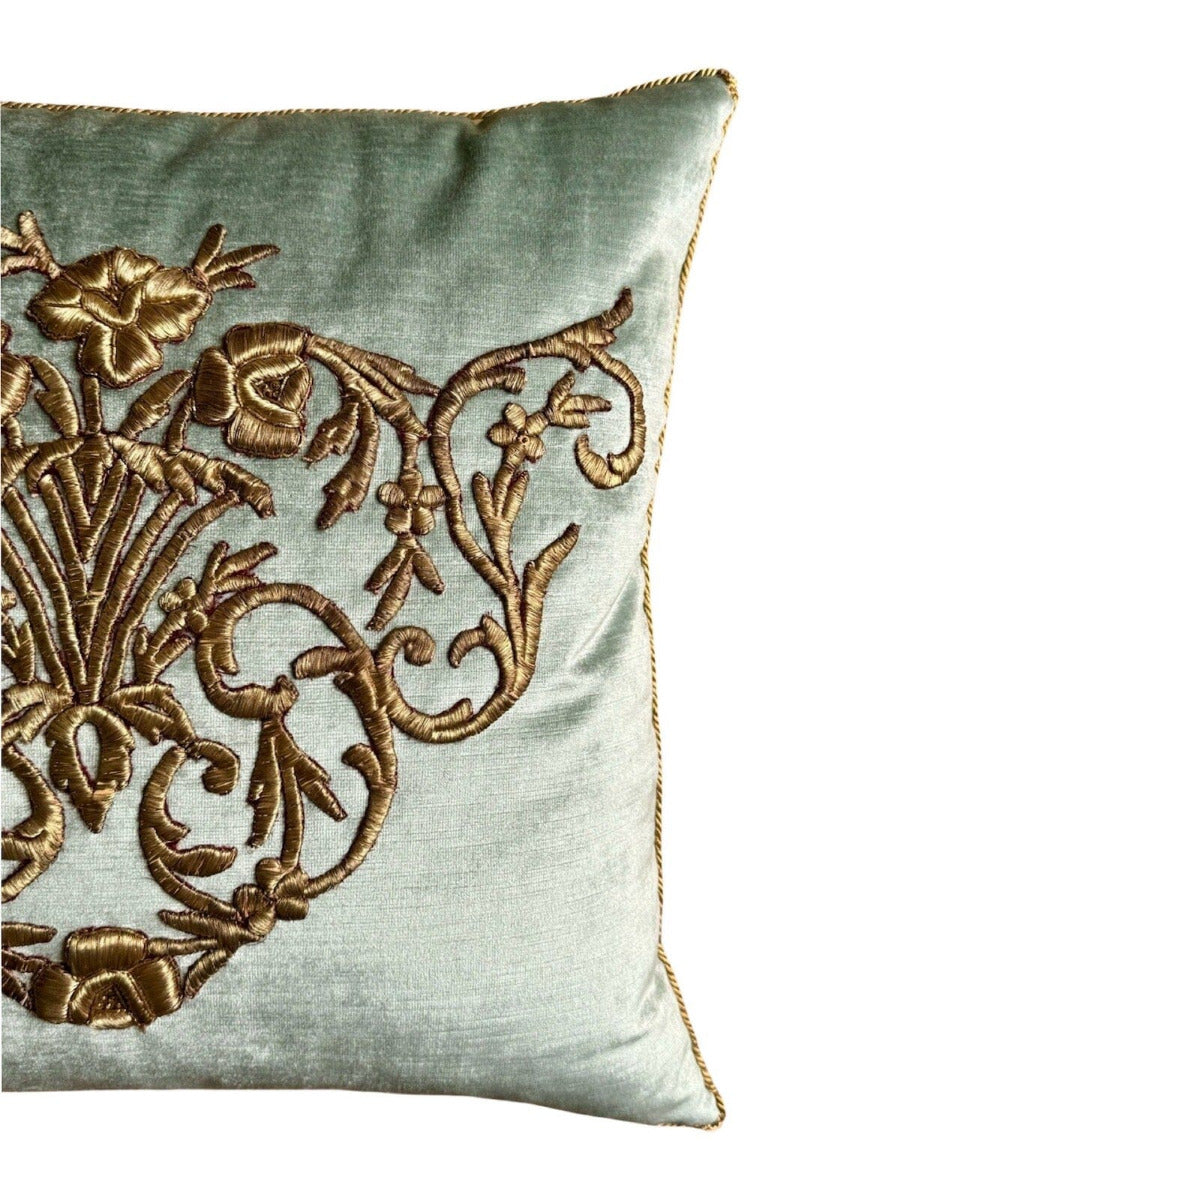 Antique Ottoman Empire Raised Gold Metallic Embroidery (#E022224A&B | 24 x 24